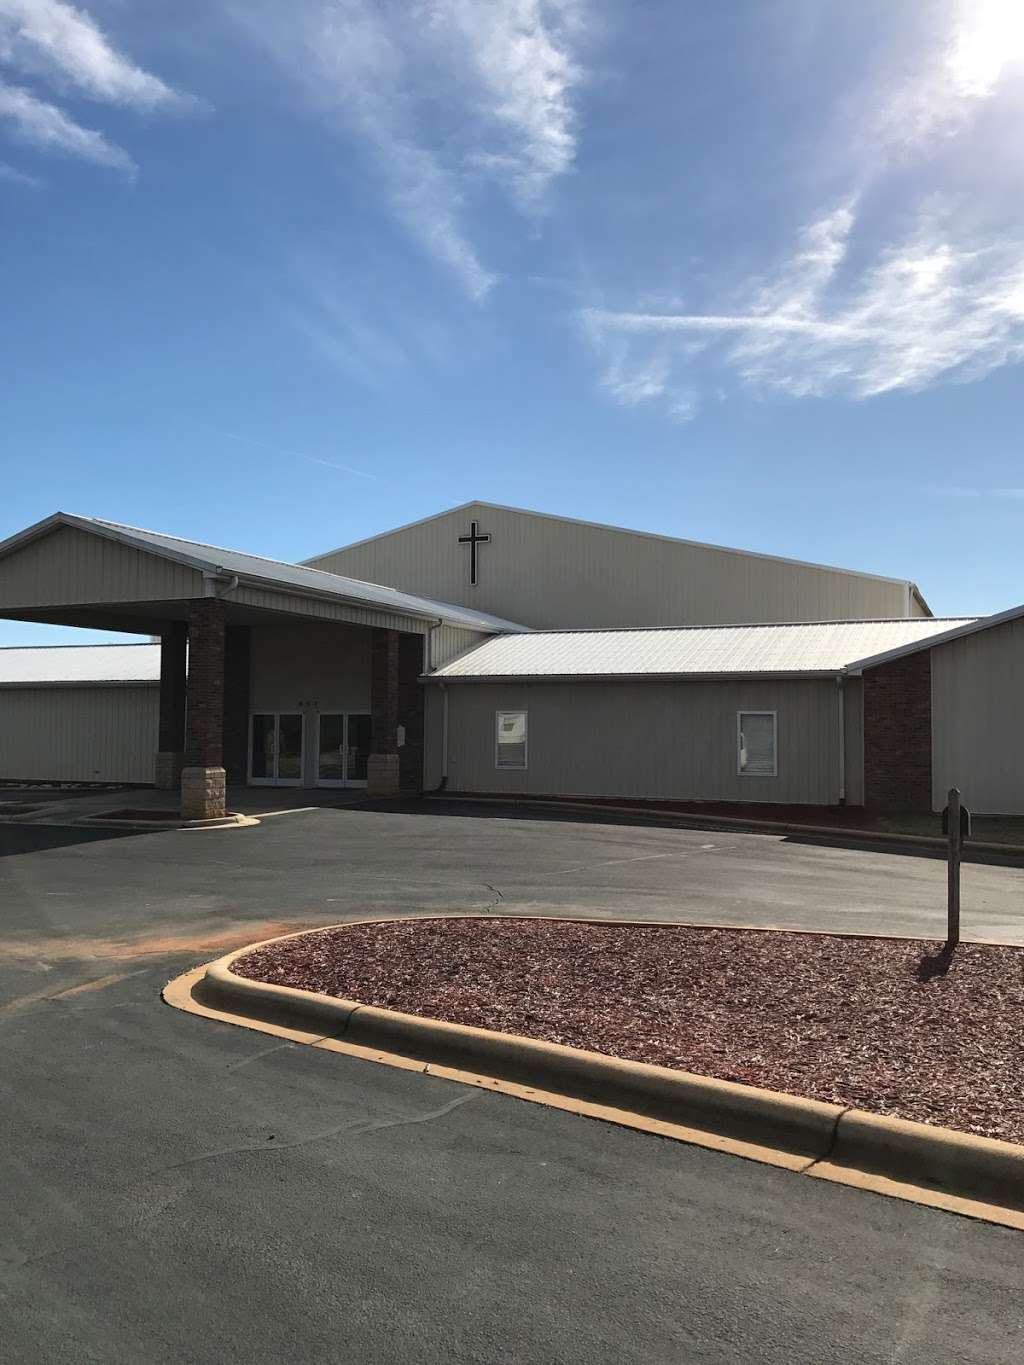 New Vision Ministries | 661 Clark Creek Rd, Lincolnton, NC 28092, USA | Phone: (704) 736-0902